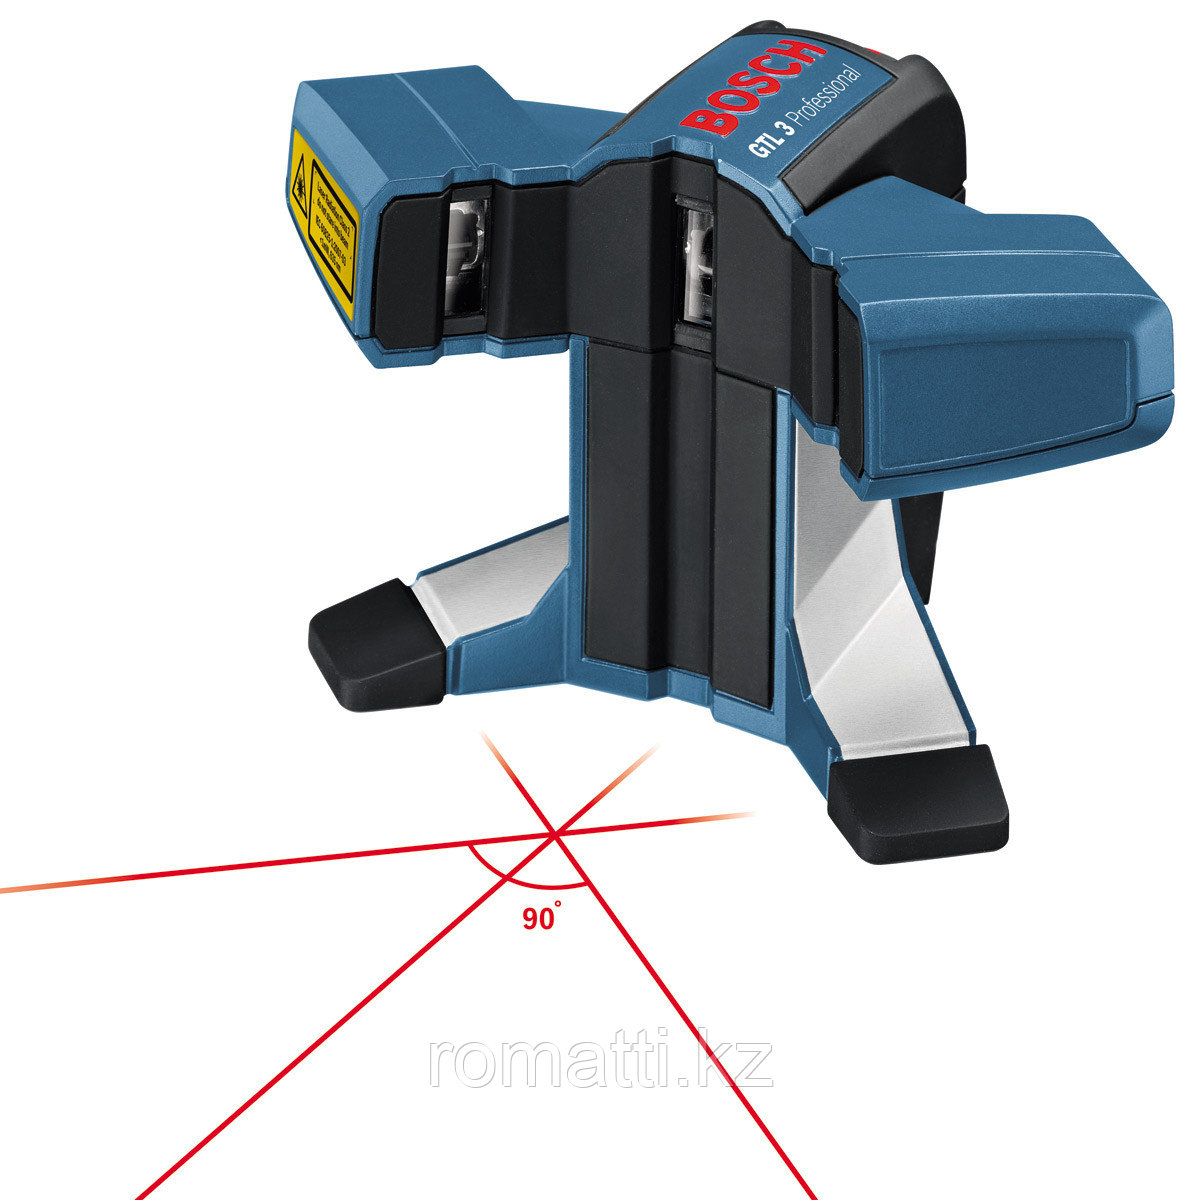 Лазер для укладки плитки Bosch GTL 3